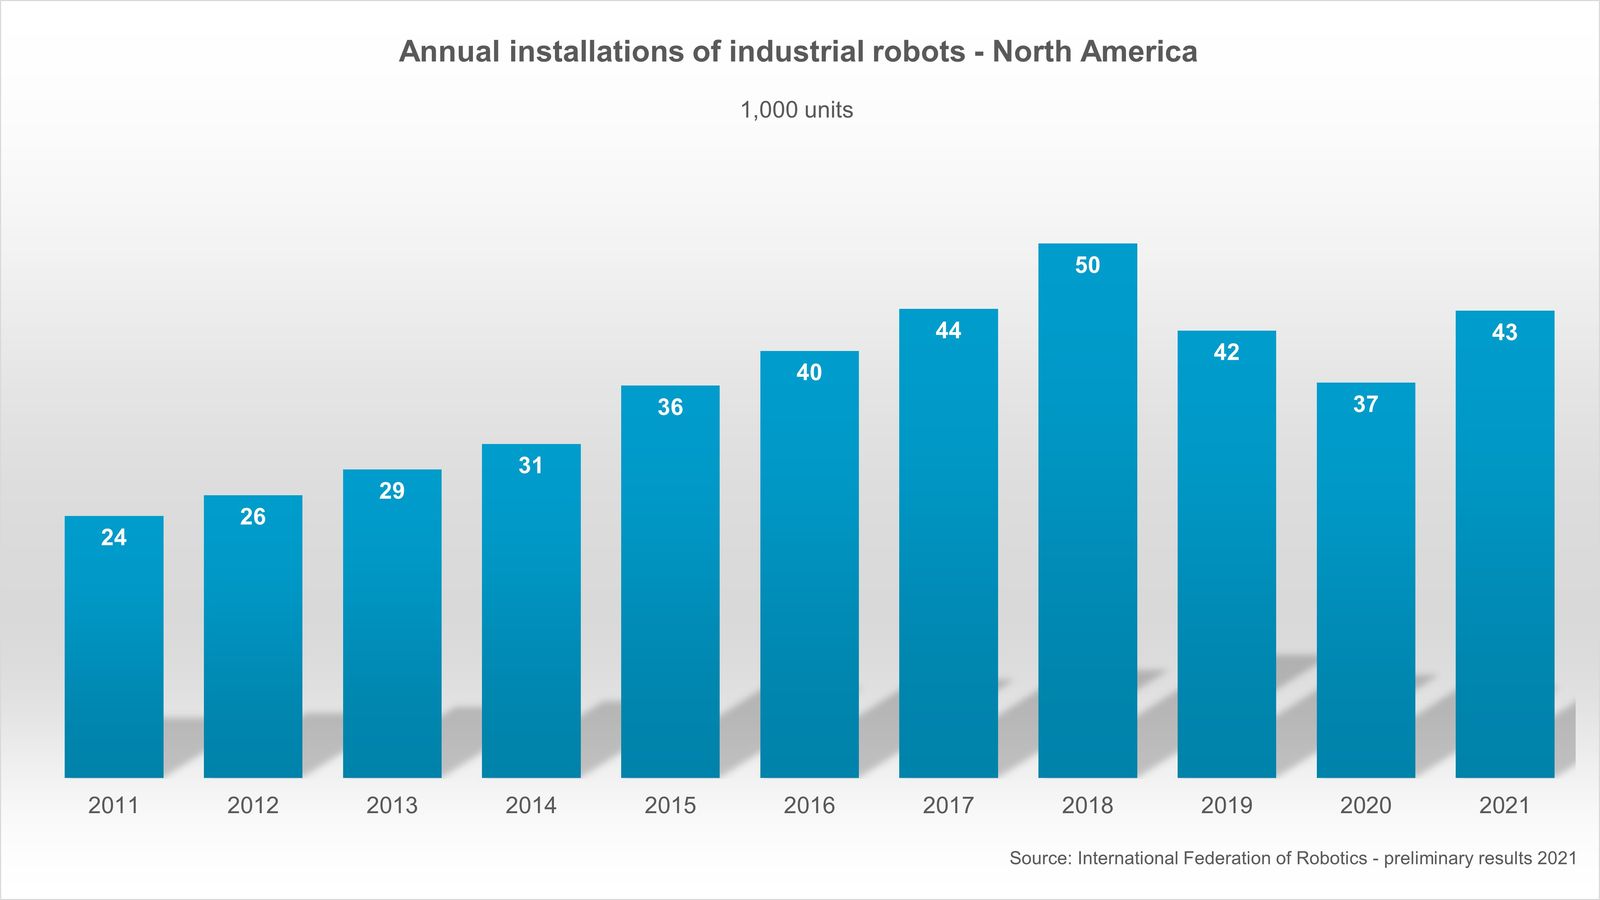 Robot installs in North America